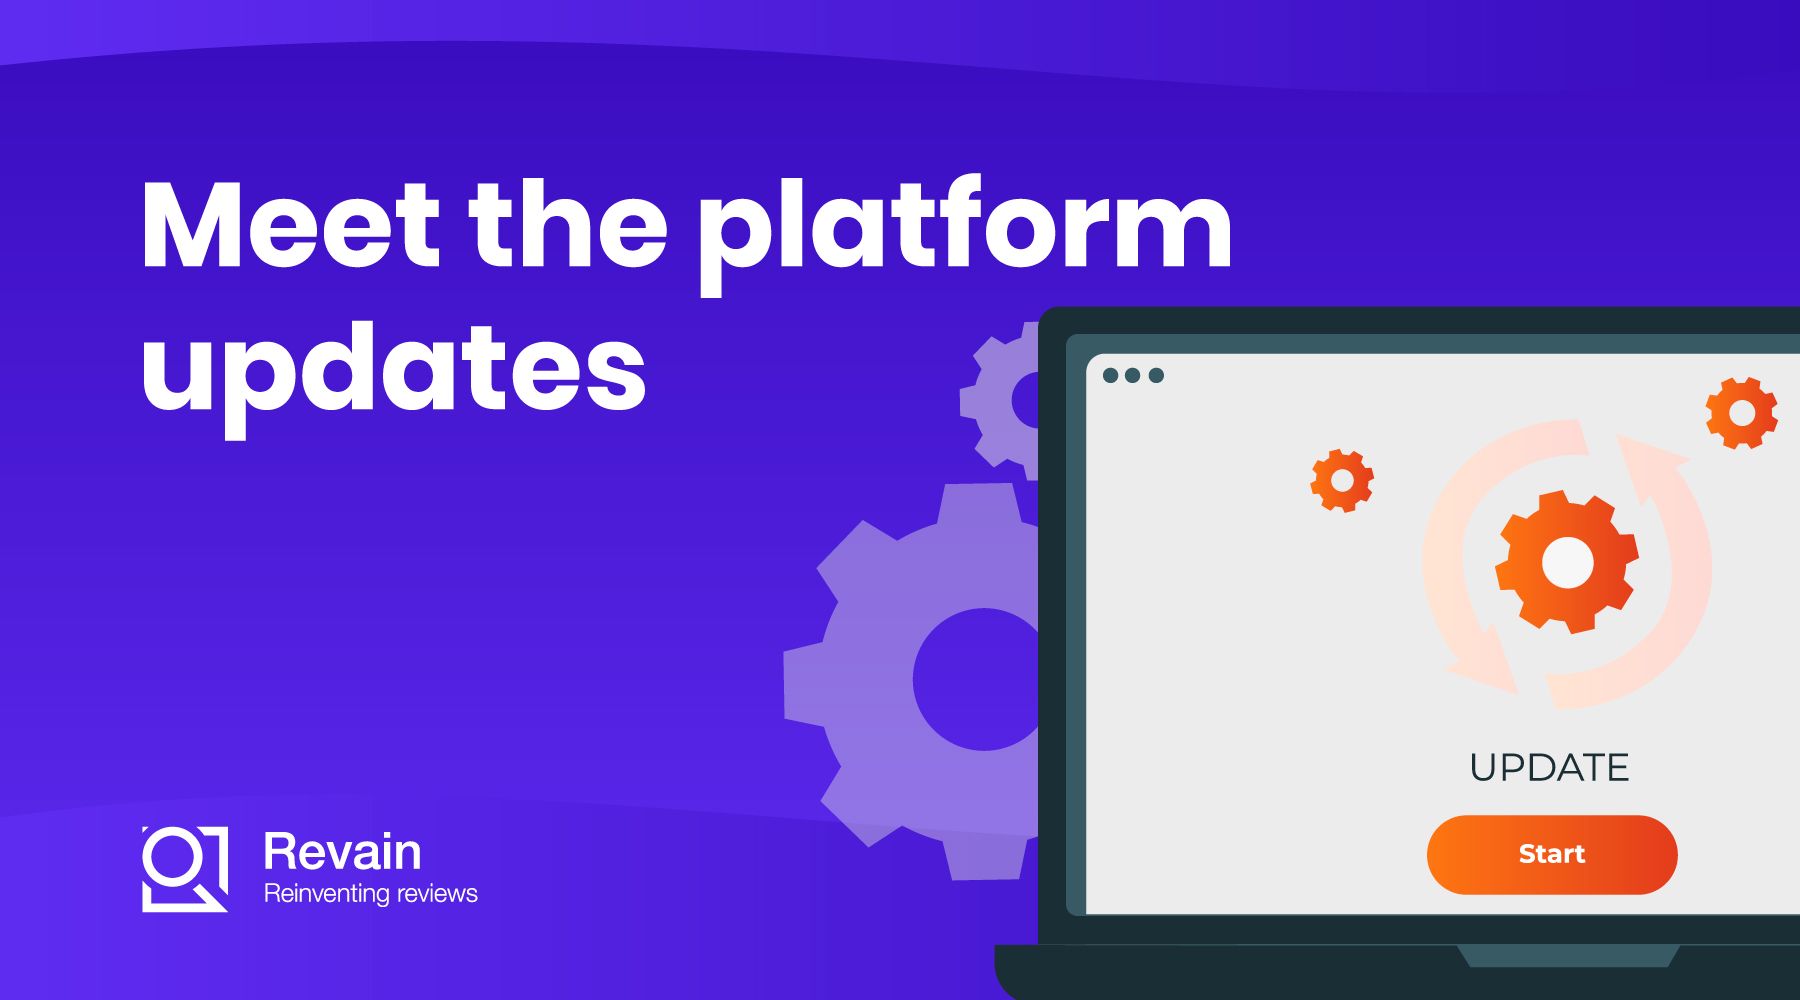 Article Meet the platform updates!